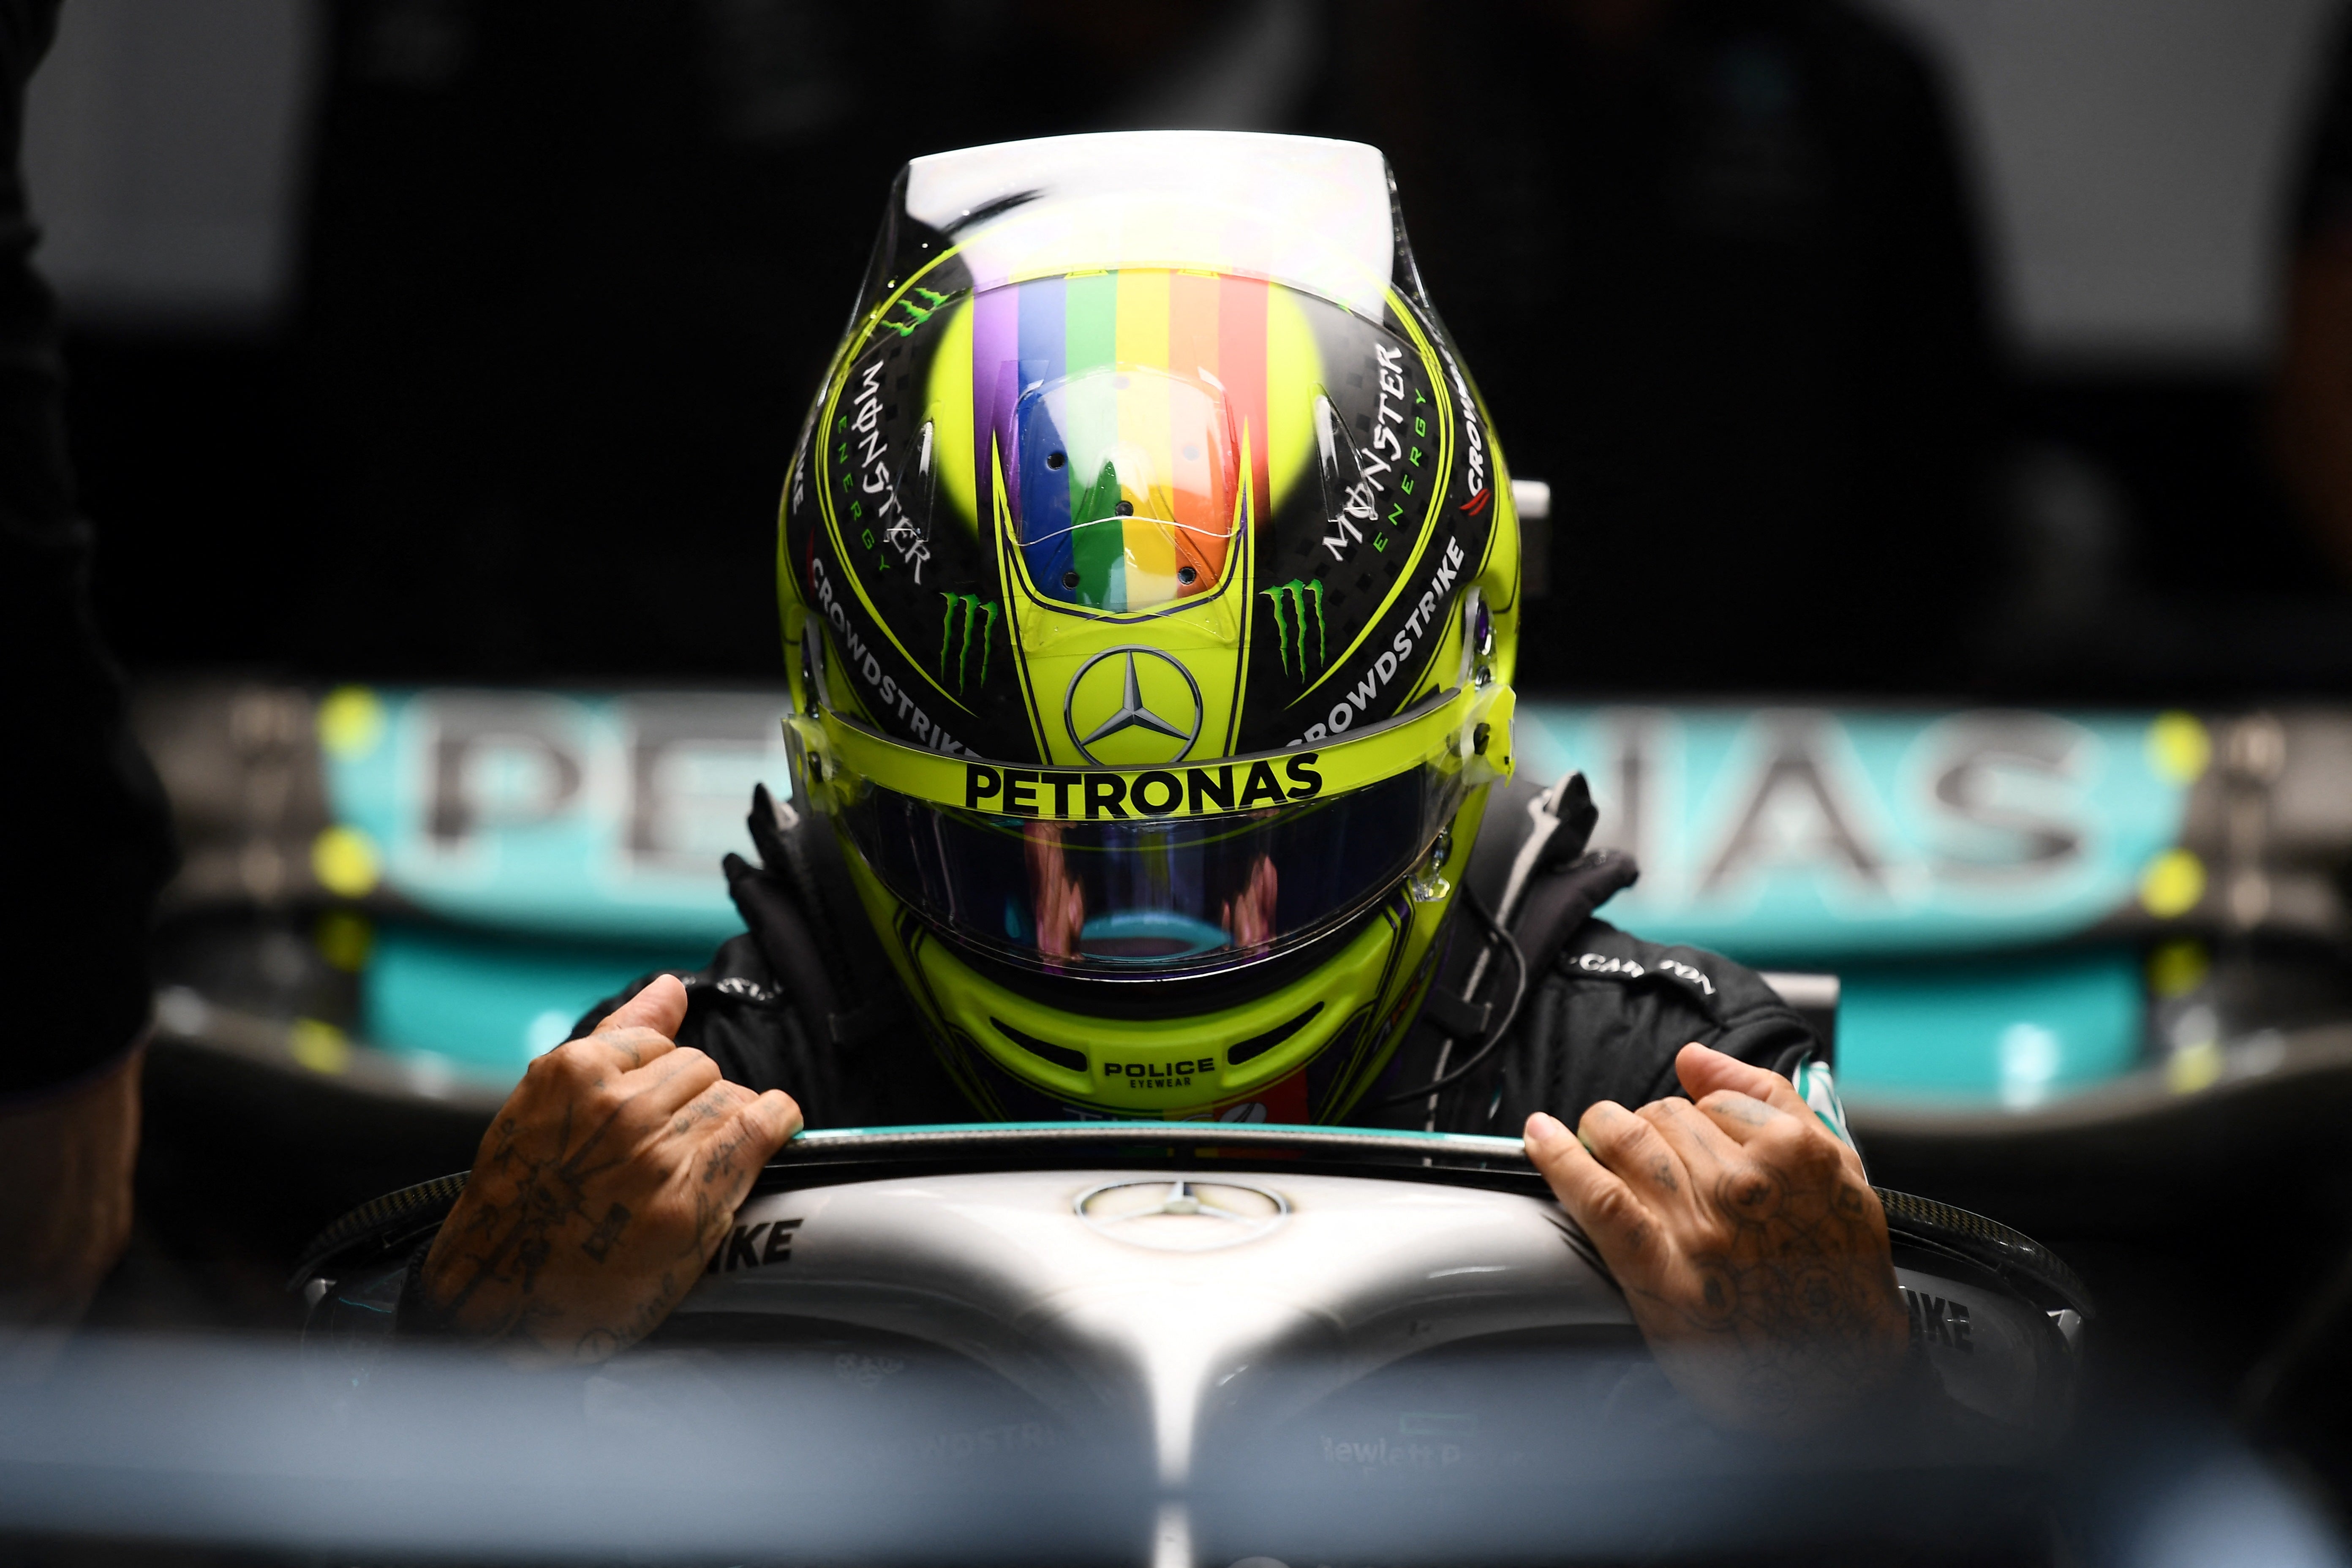 Lewis Hamilton has seven world titles